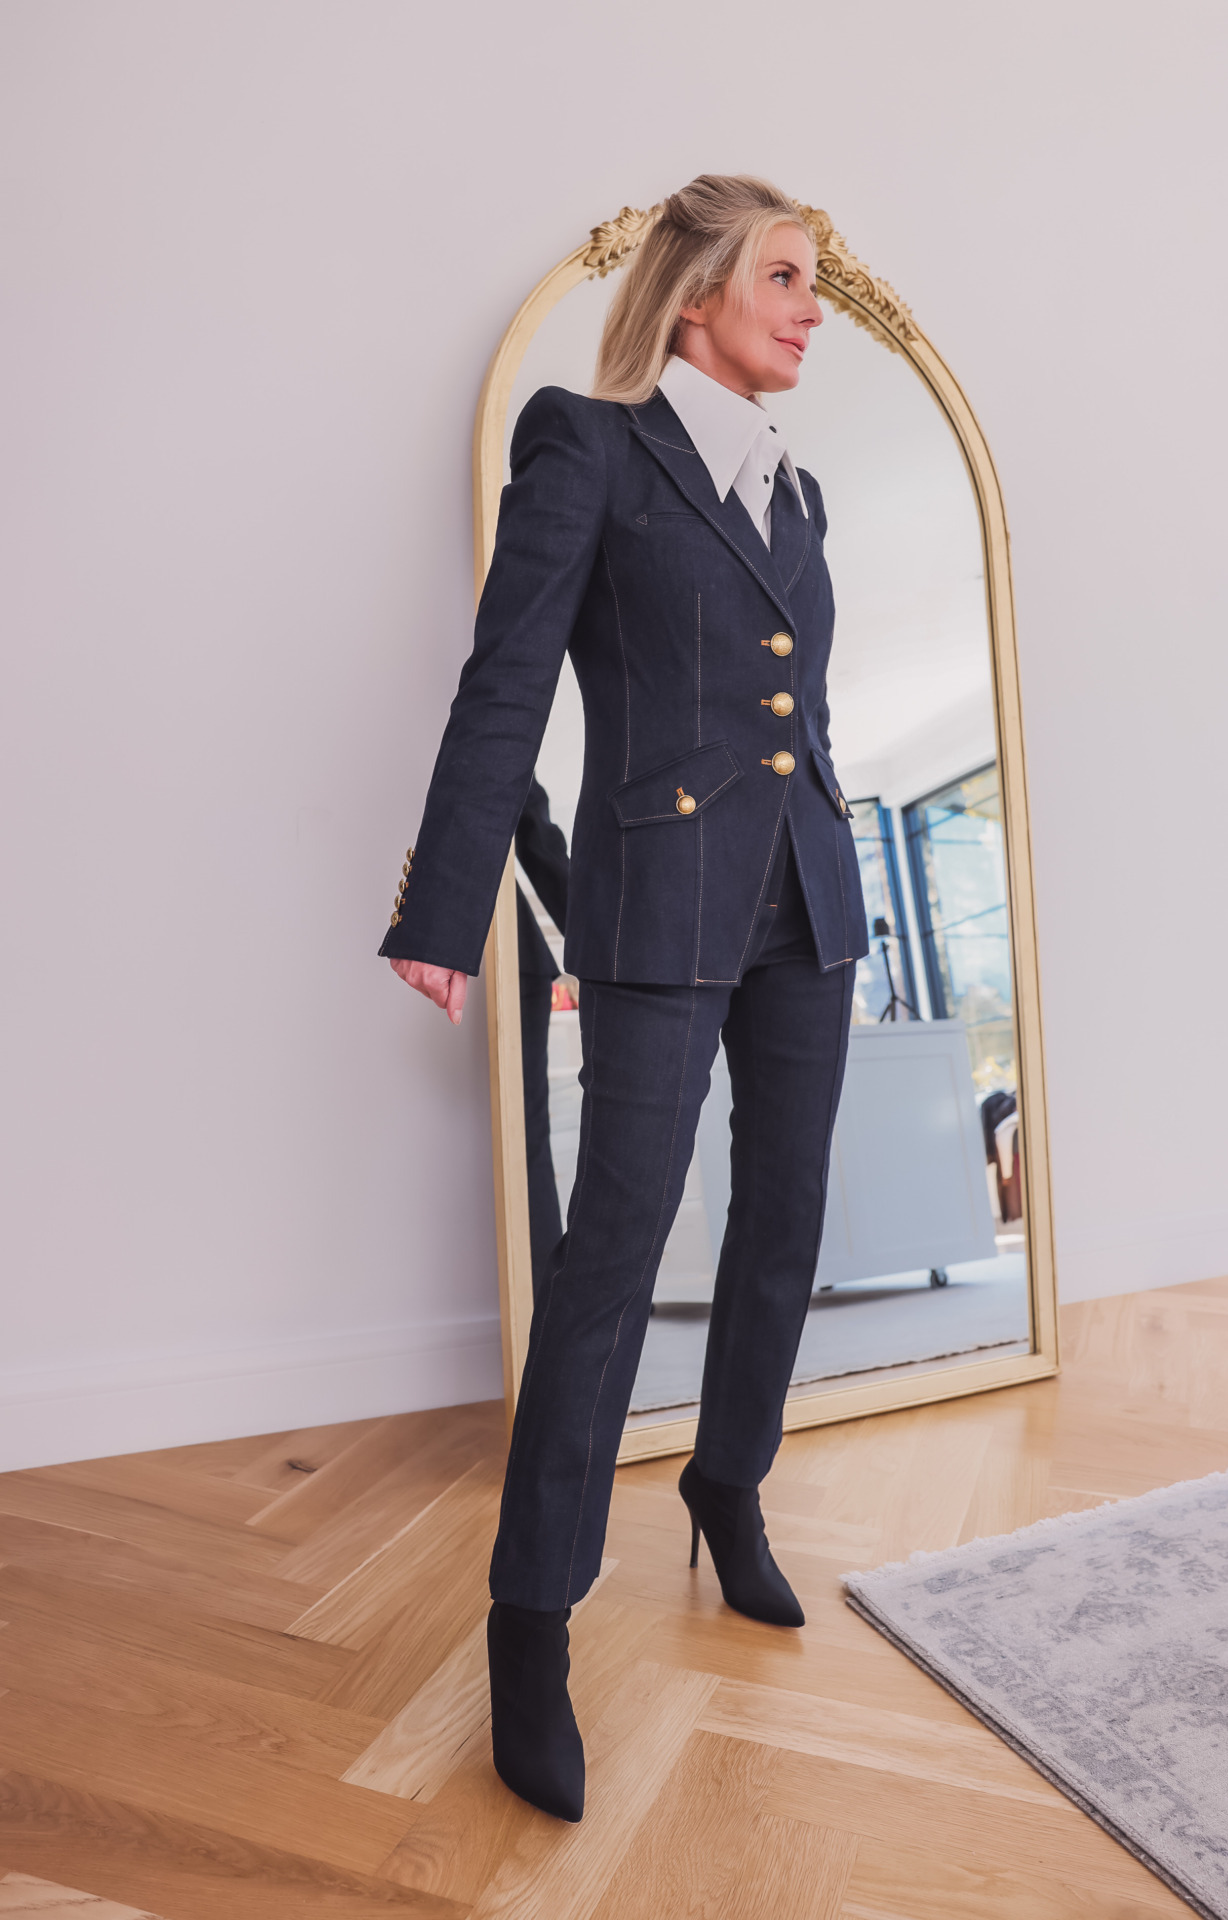 Denim Blazer Suit | How To Style A Jean Jacket